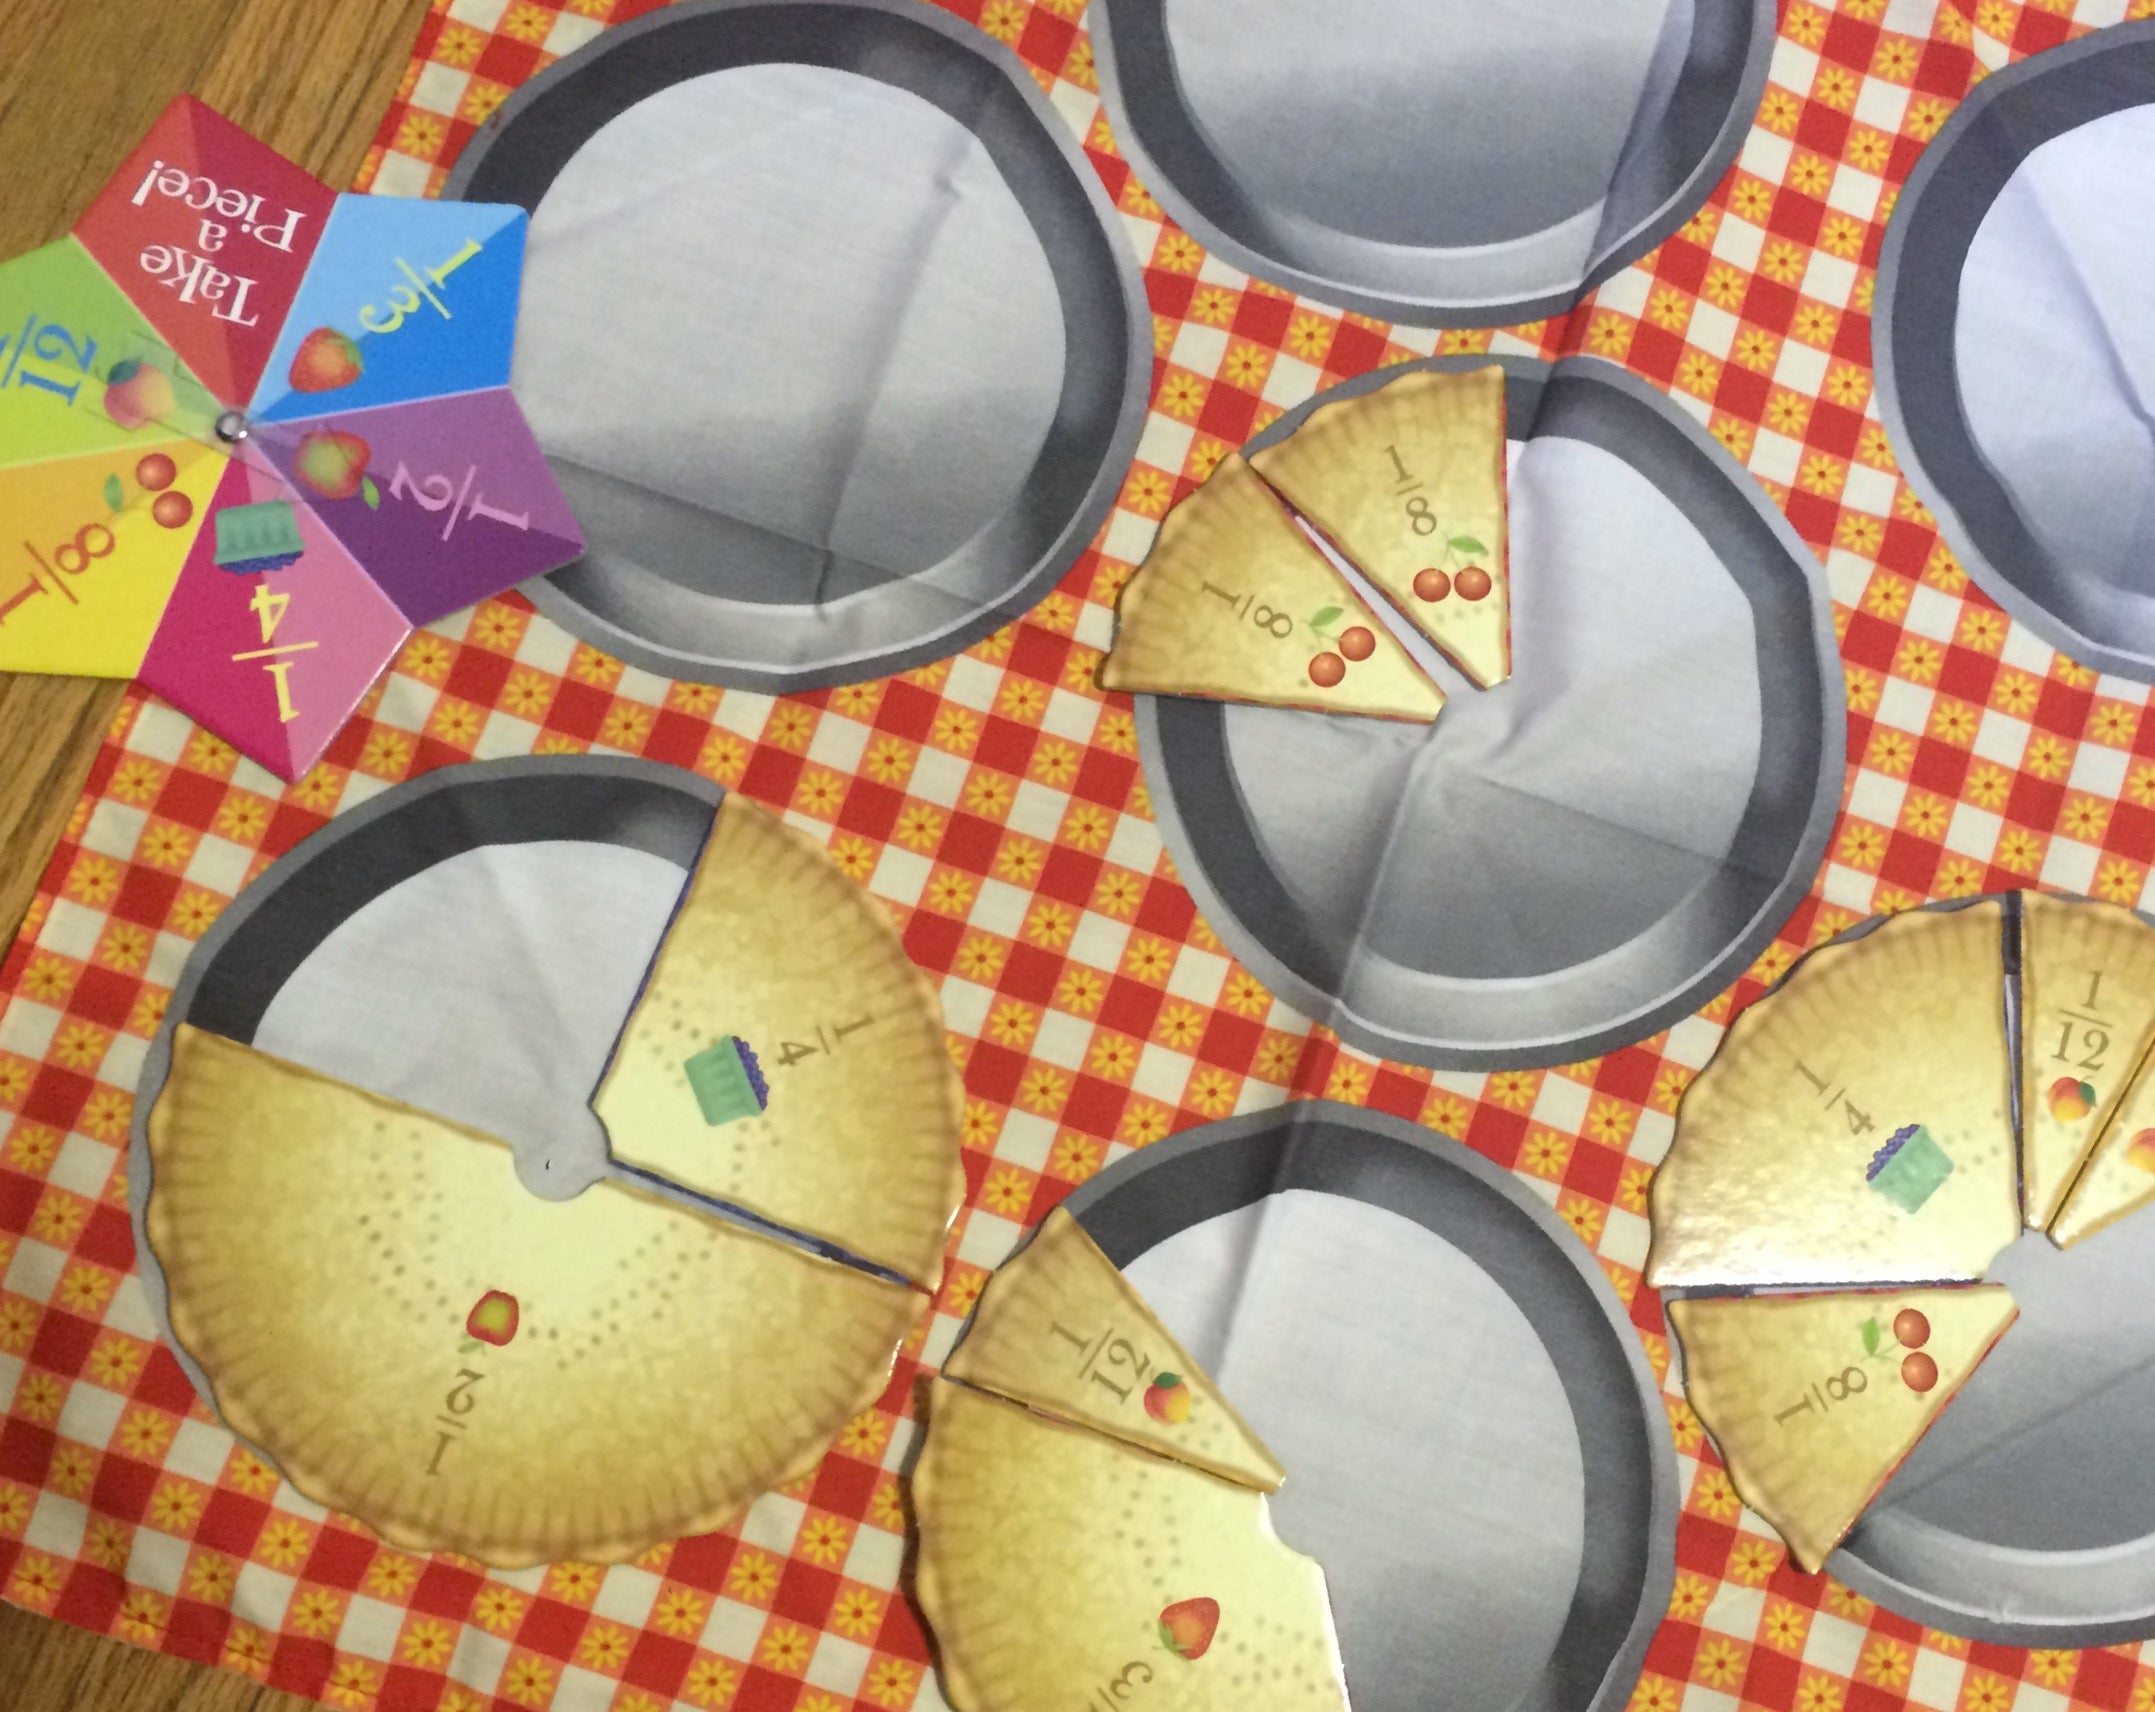 EEBOO - Game - Make A Pie - Maths